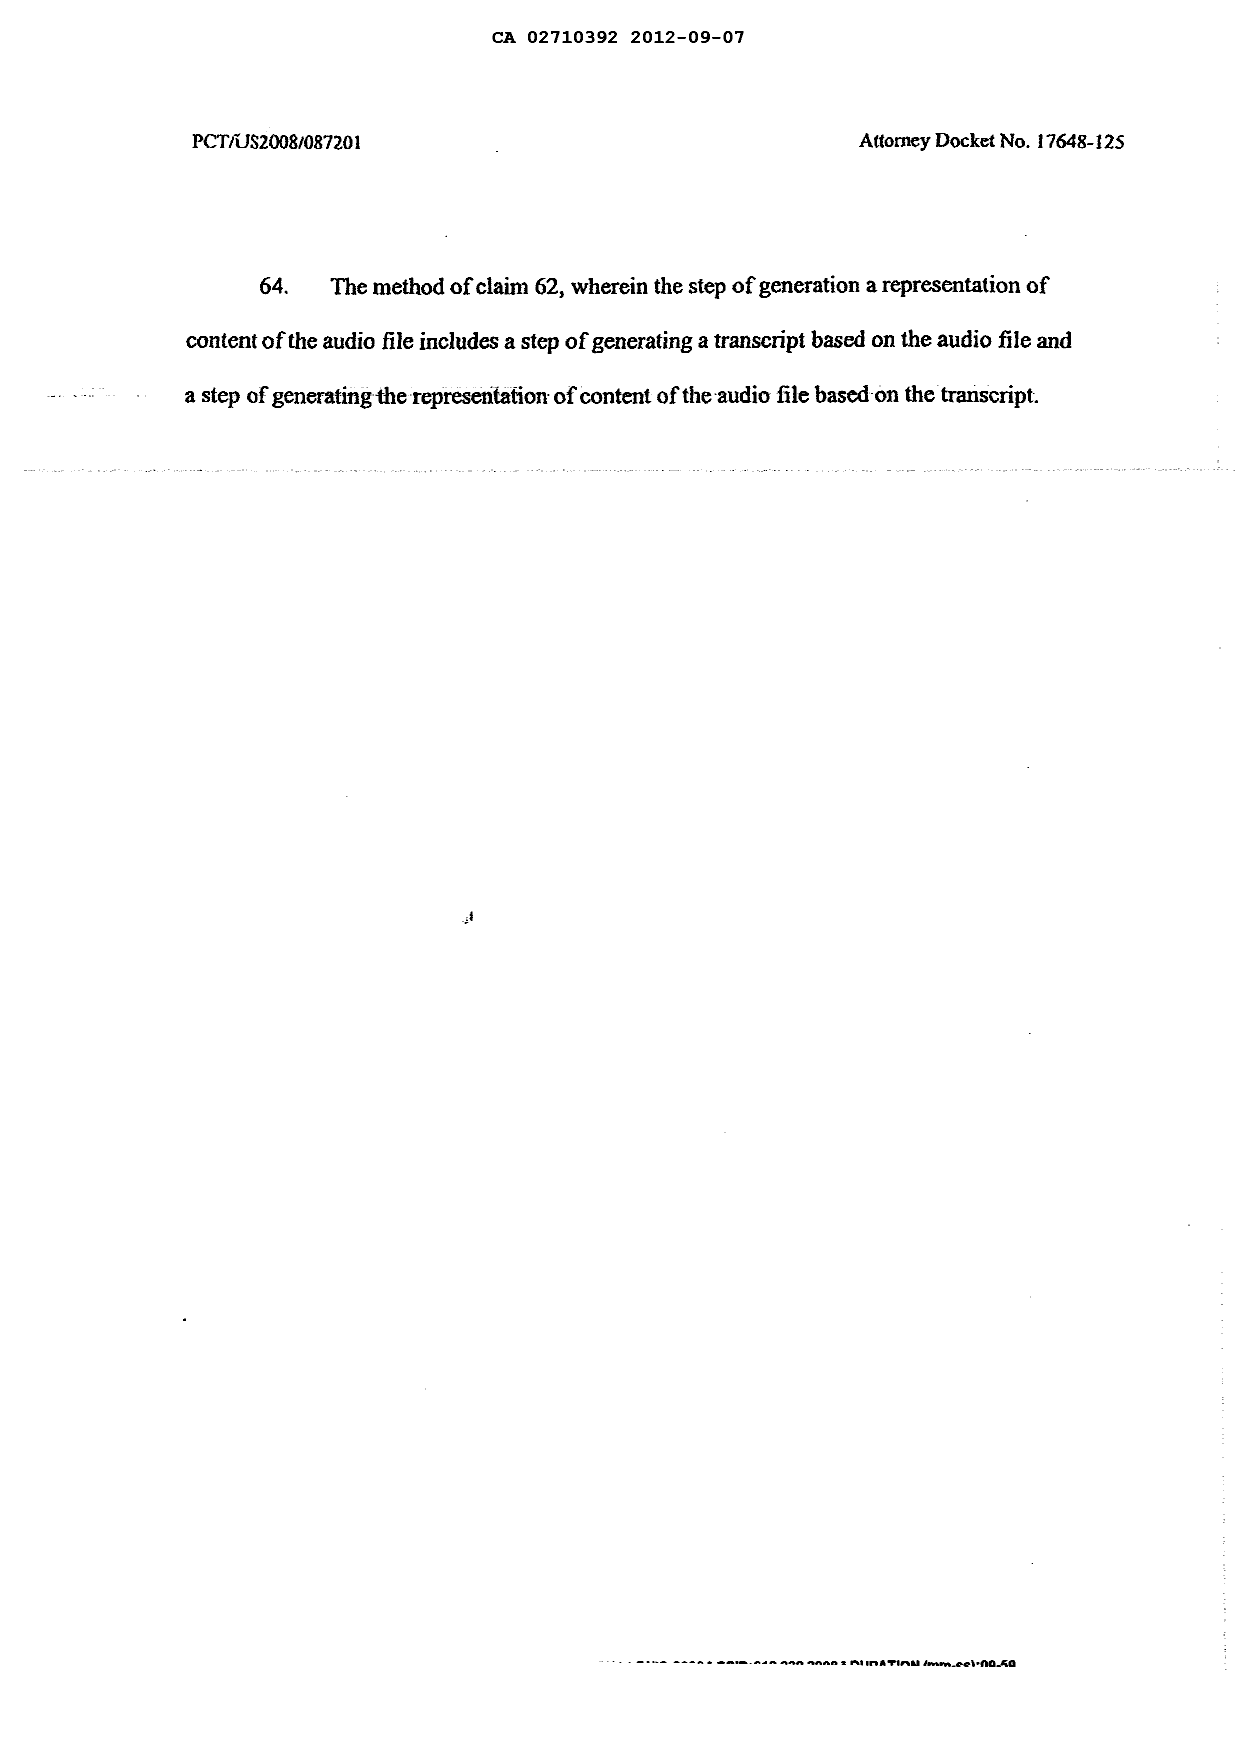 Canadian Patent Document 2710392. Correspondence 20120907. Image 56 of 56